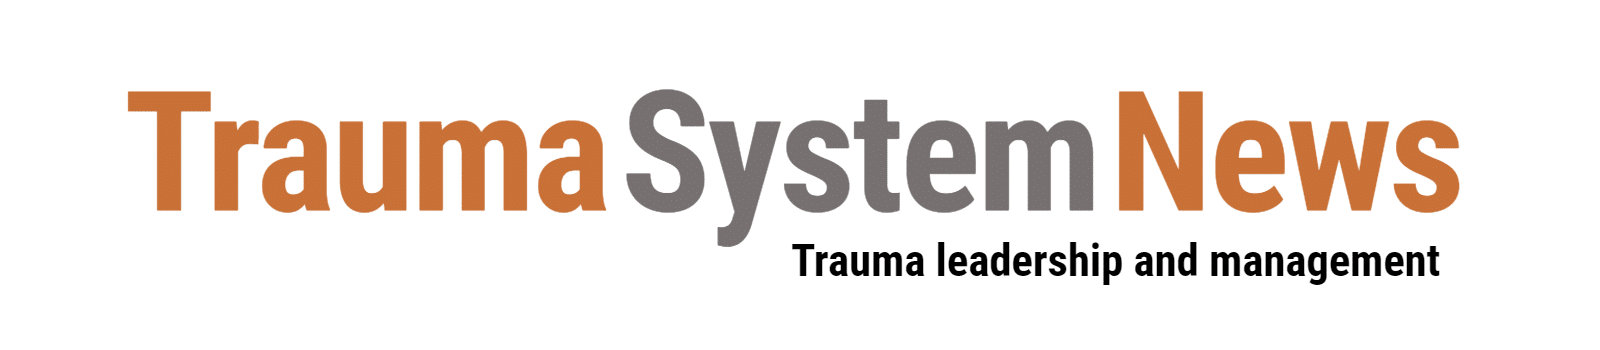 Trauma System News